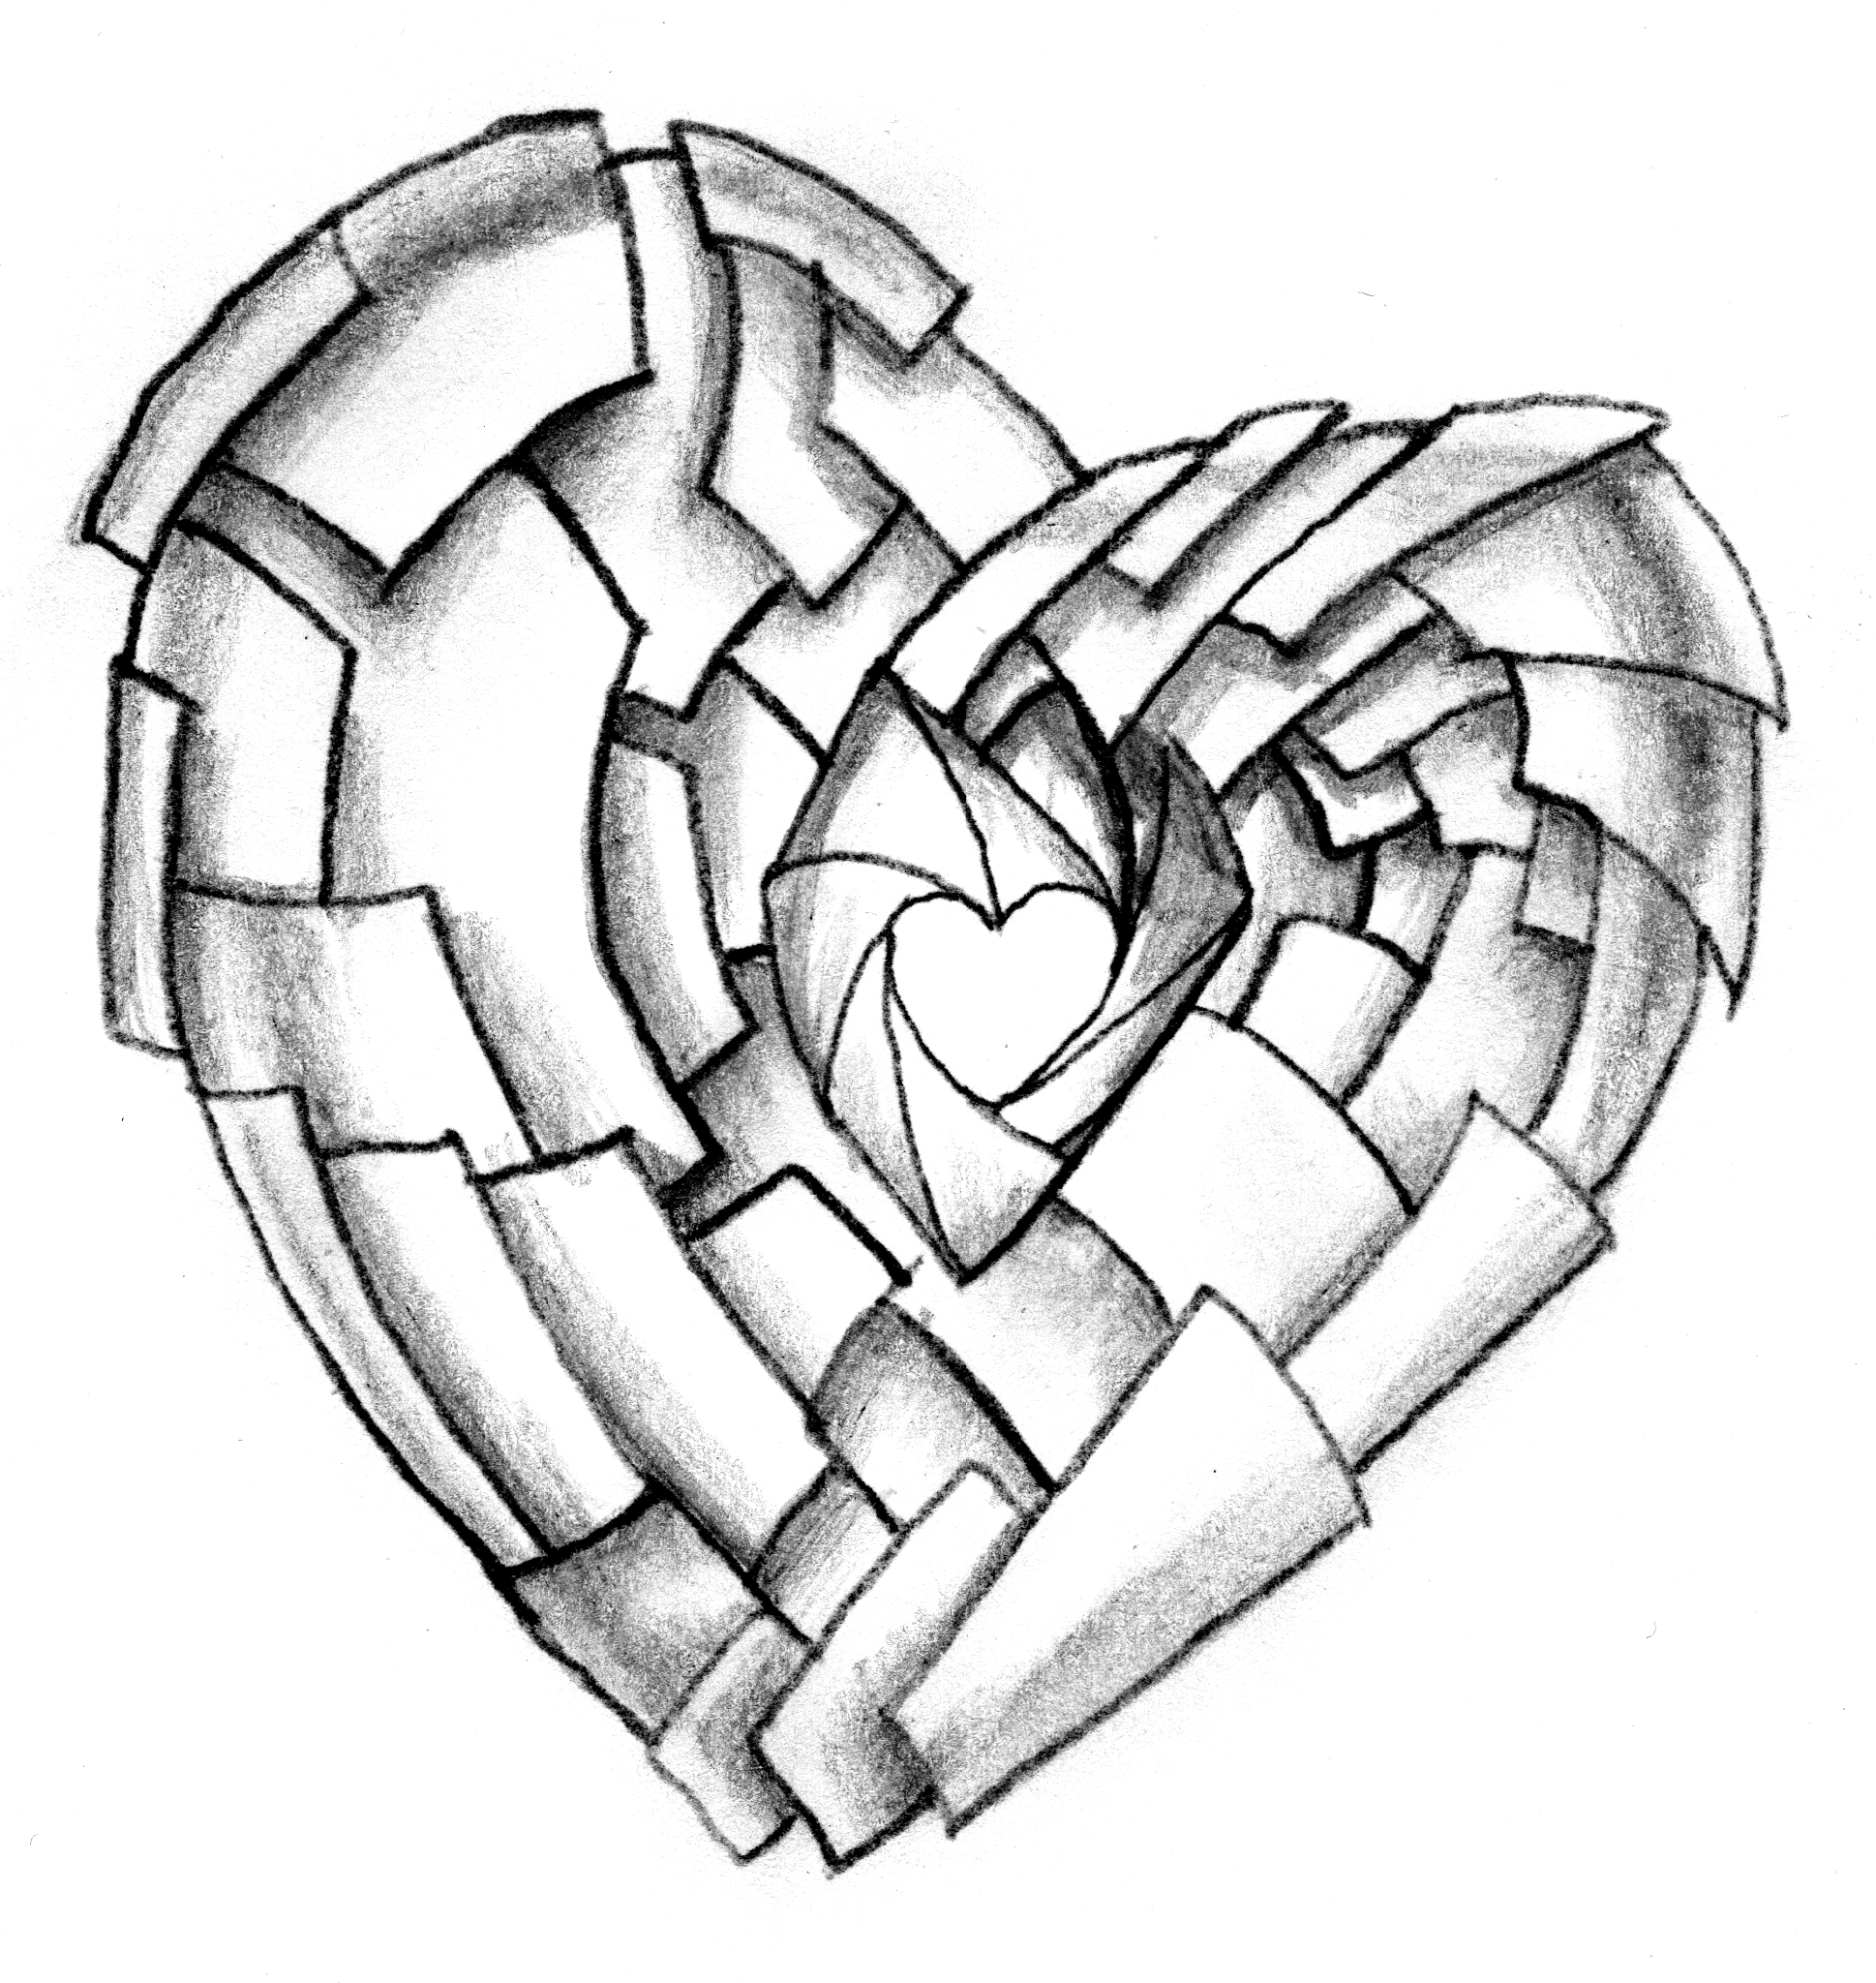 Free Pencil Art Love Heart, Download Free Pencil Art Love Heart png